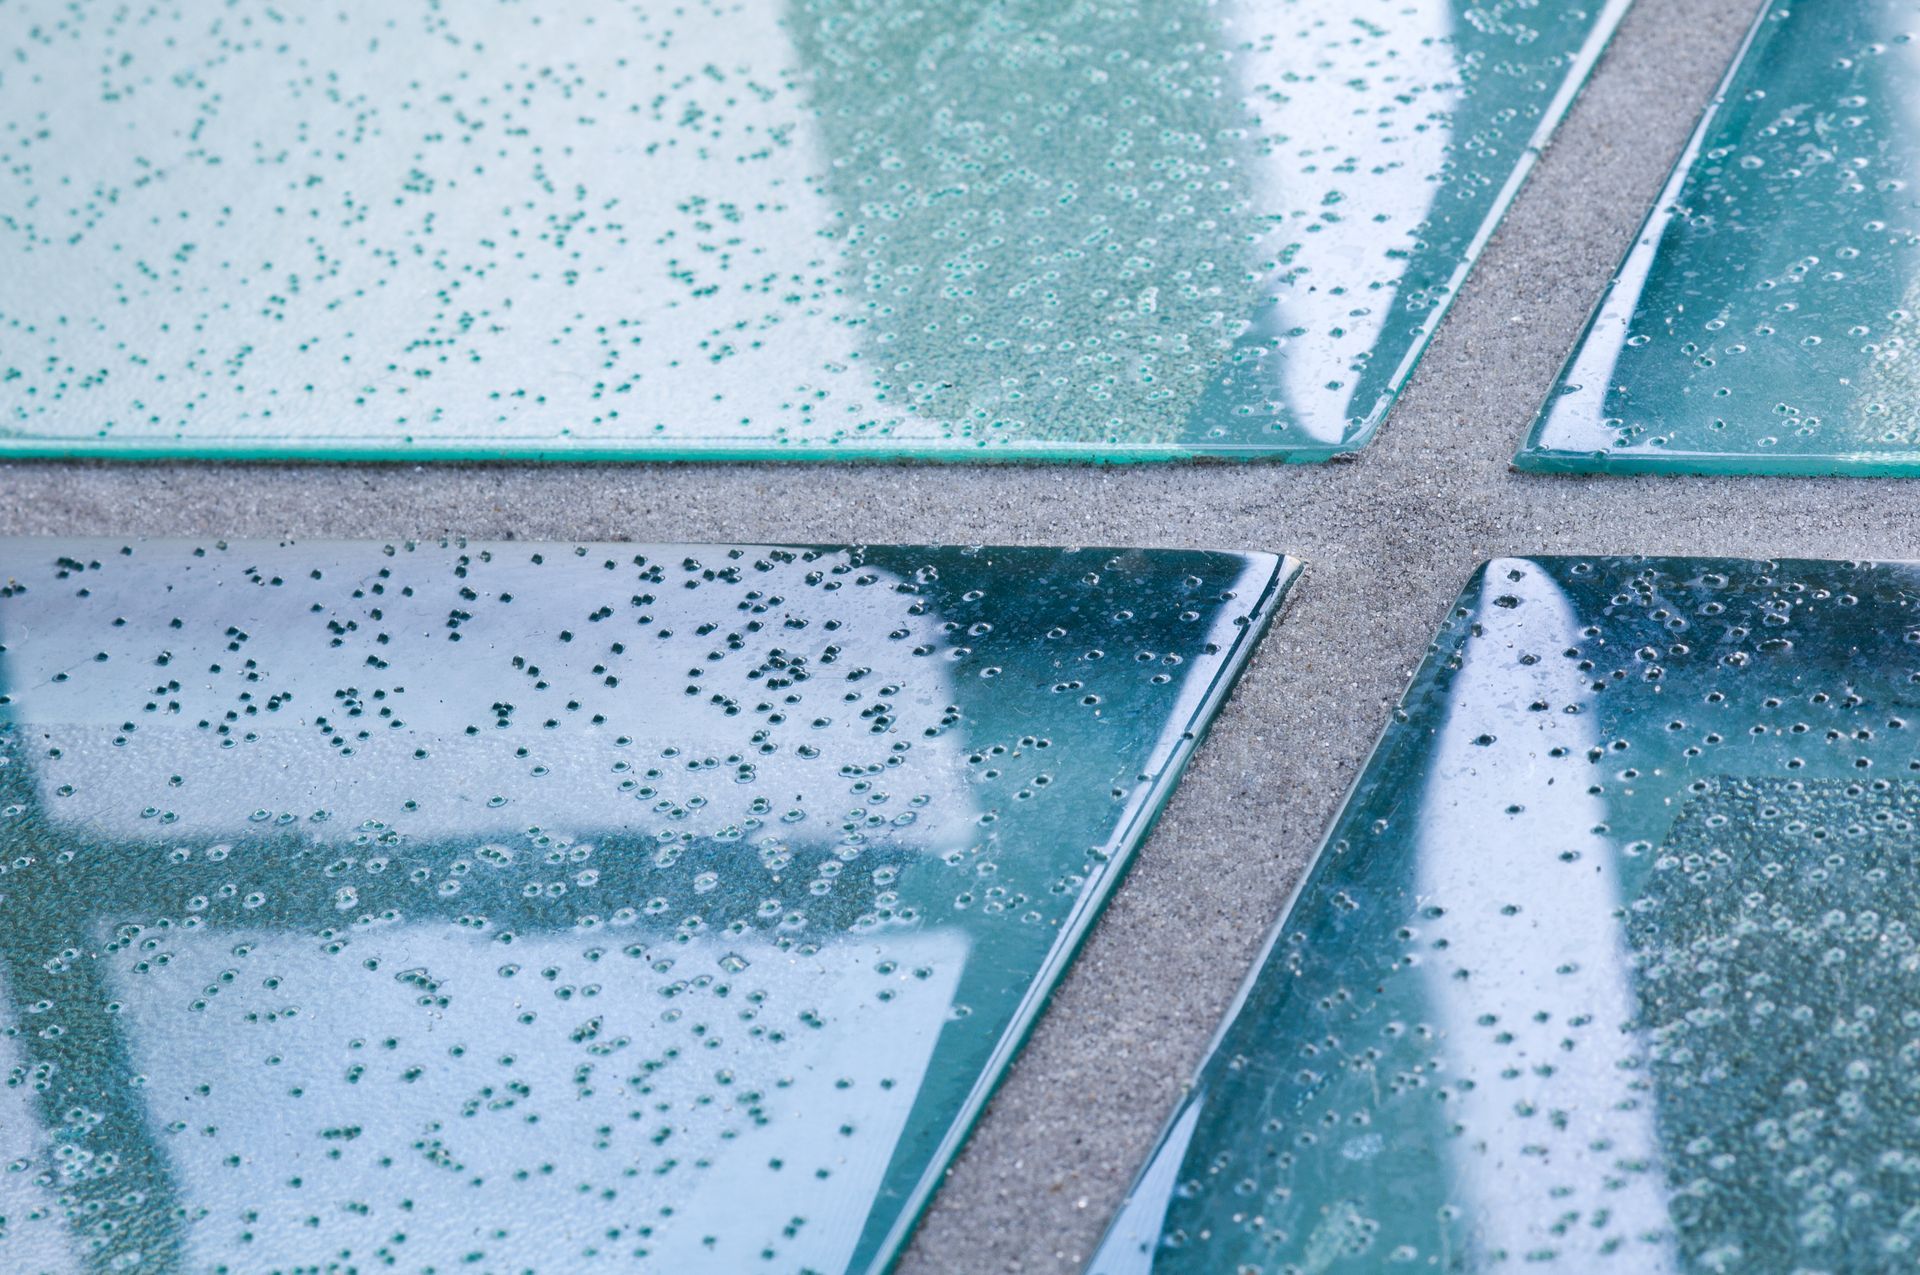 Textured glass to achieve safe anti-slip glass.